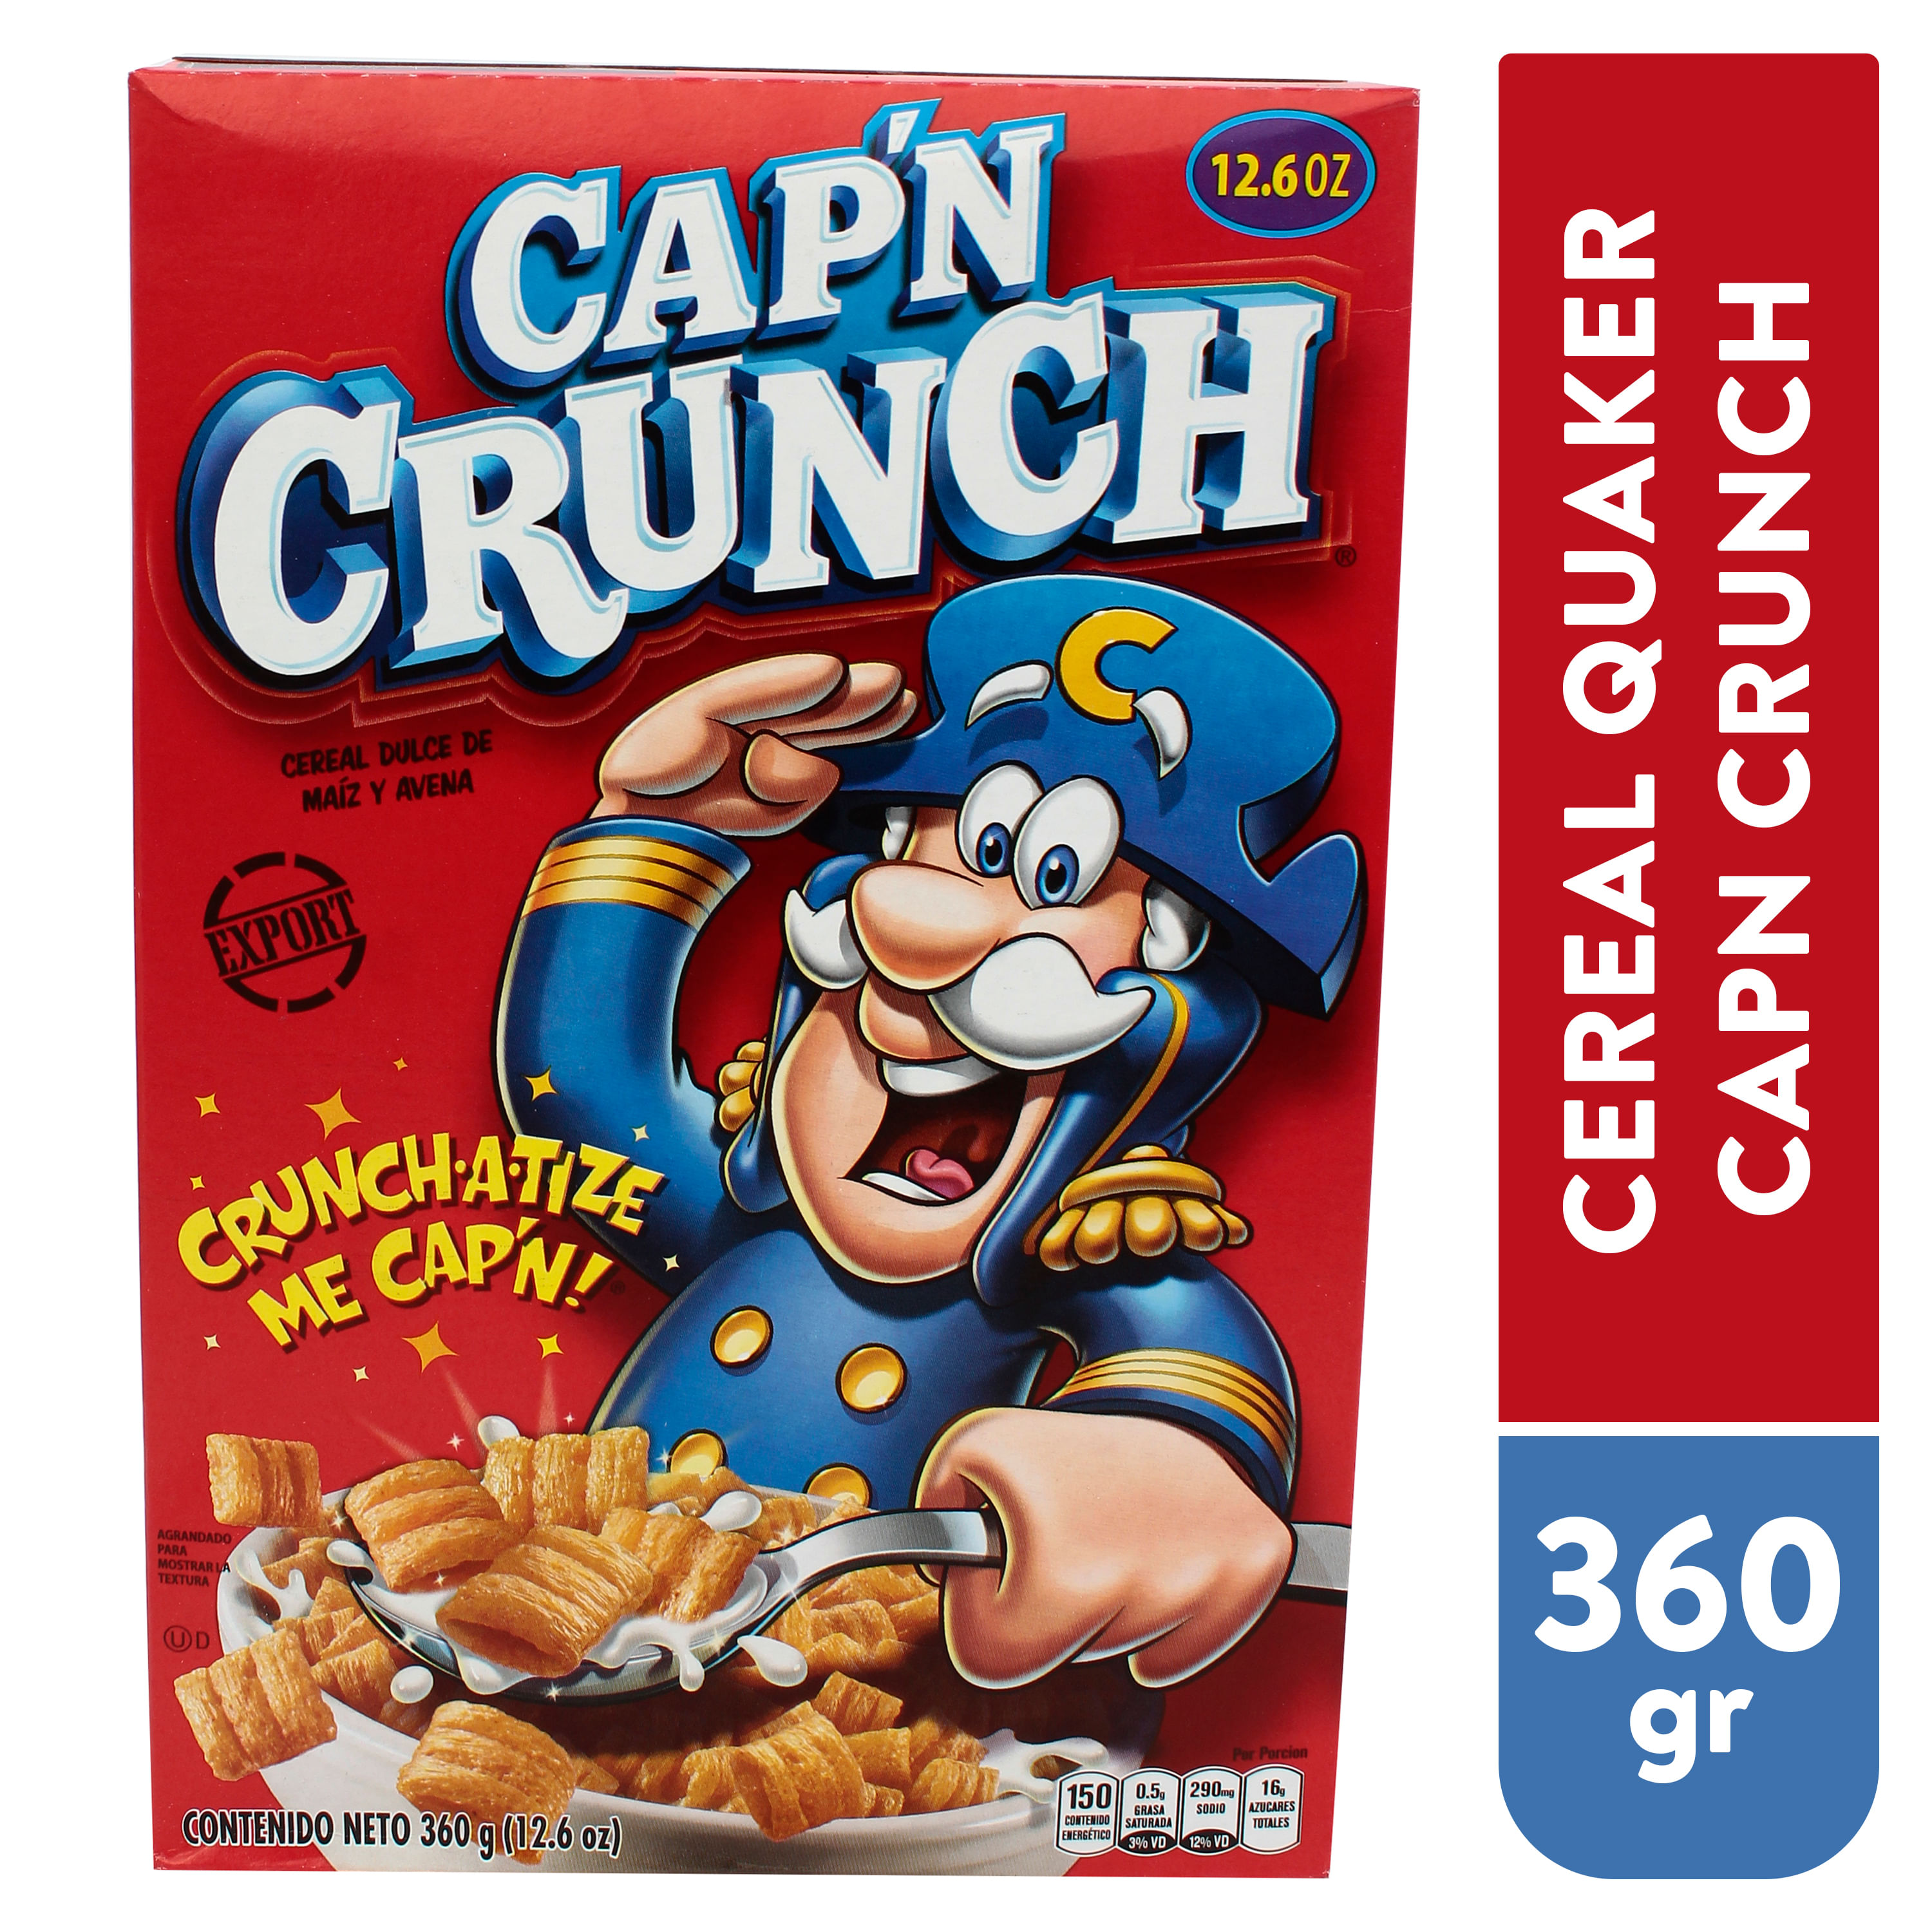 Cereal-Quaker-Capn-Crunch-Origina-360gr-1-76191